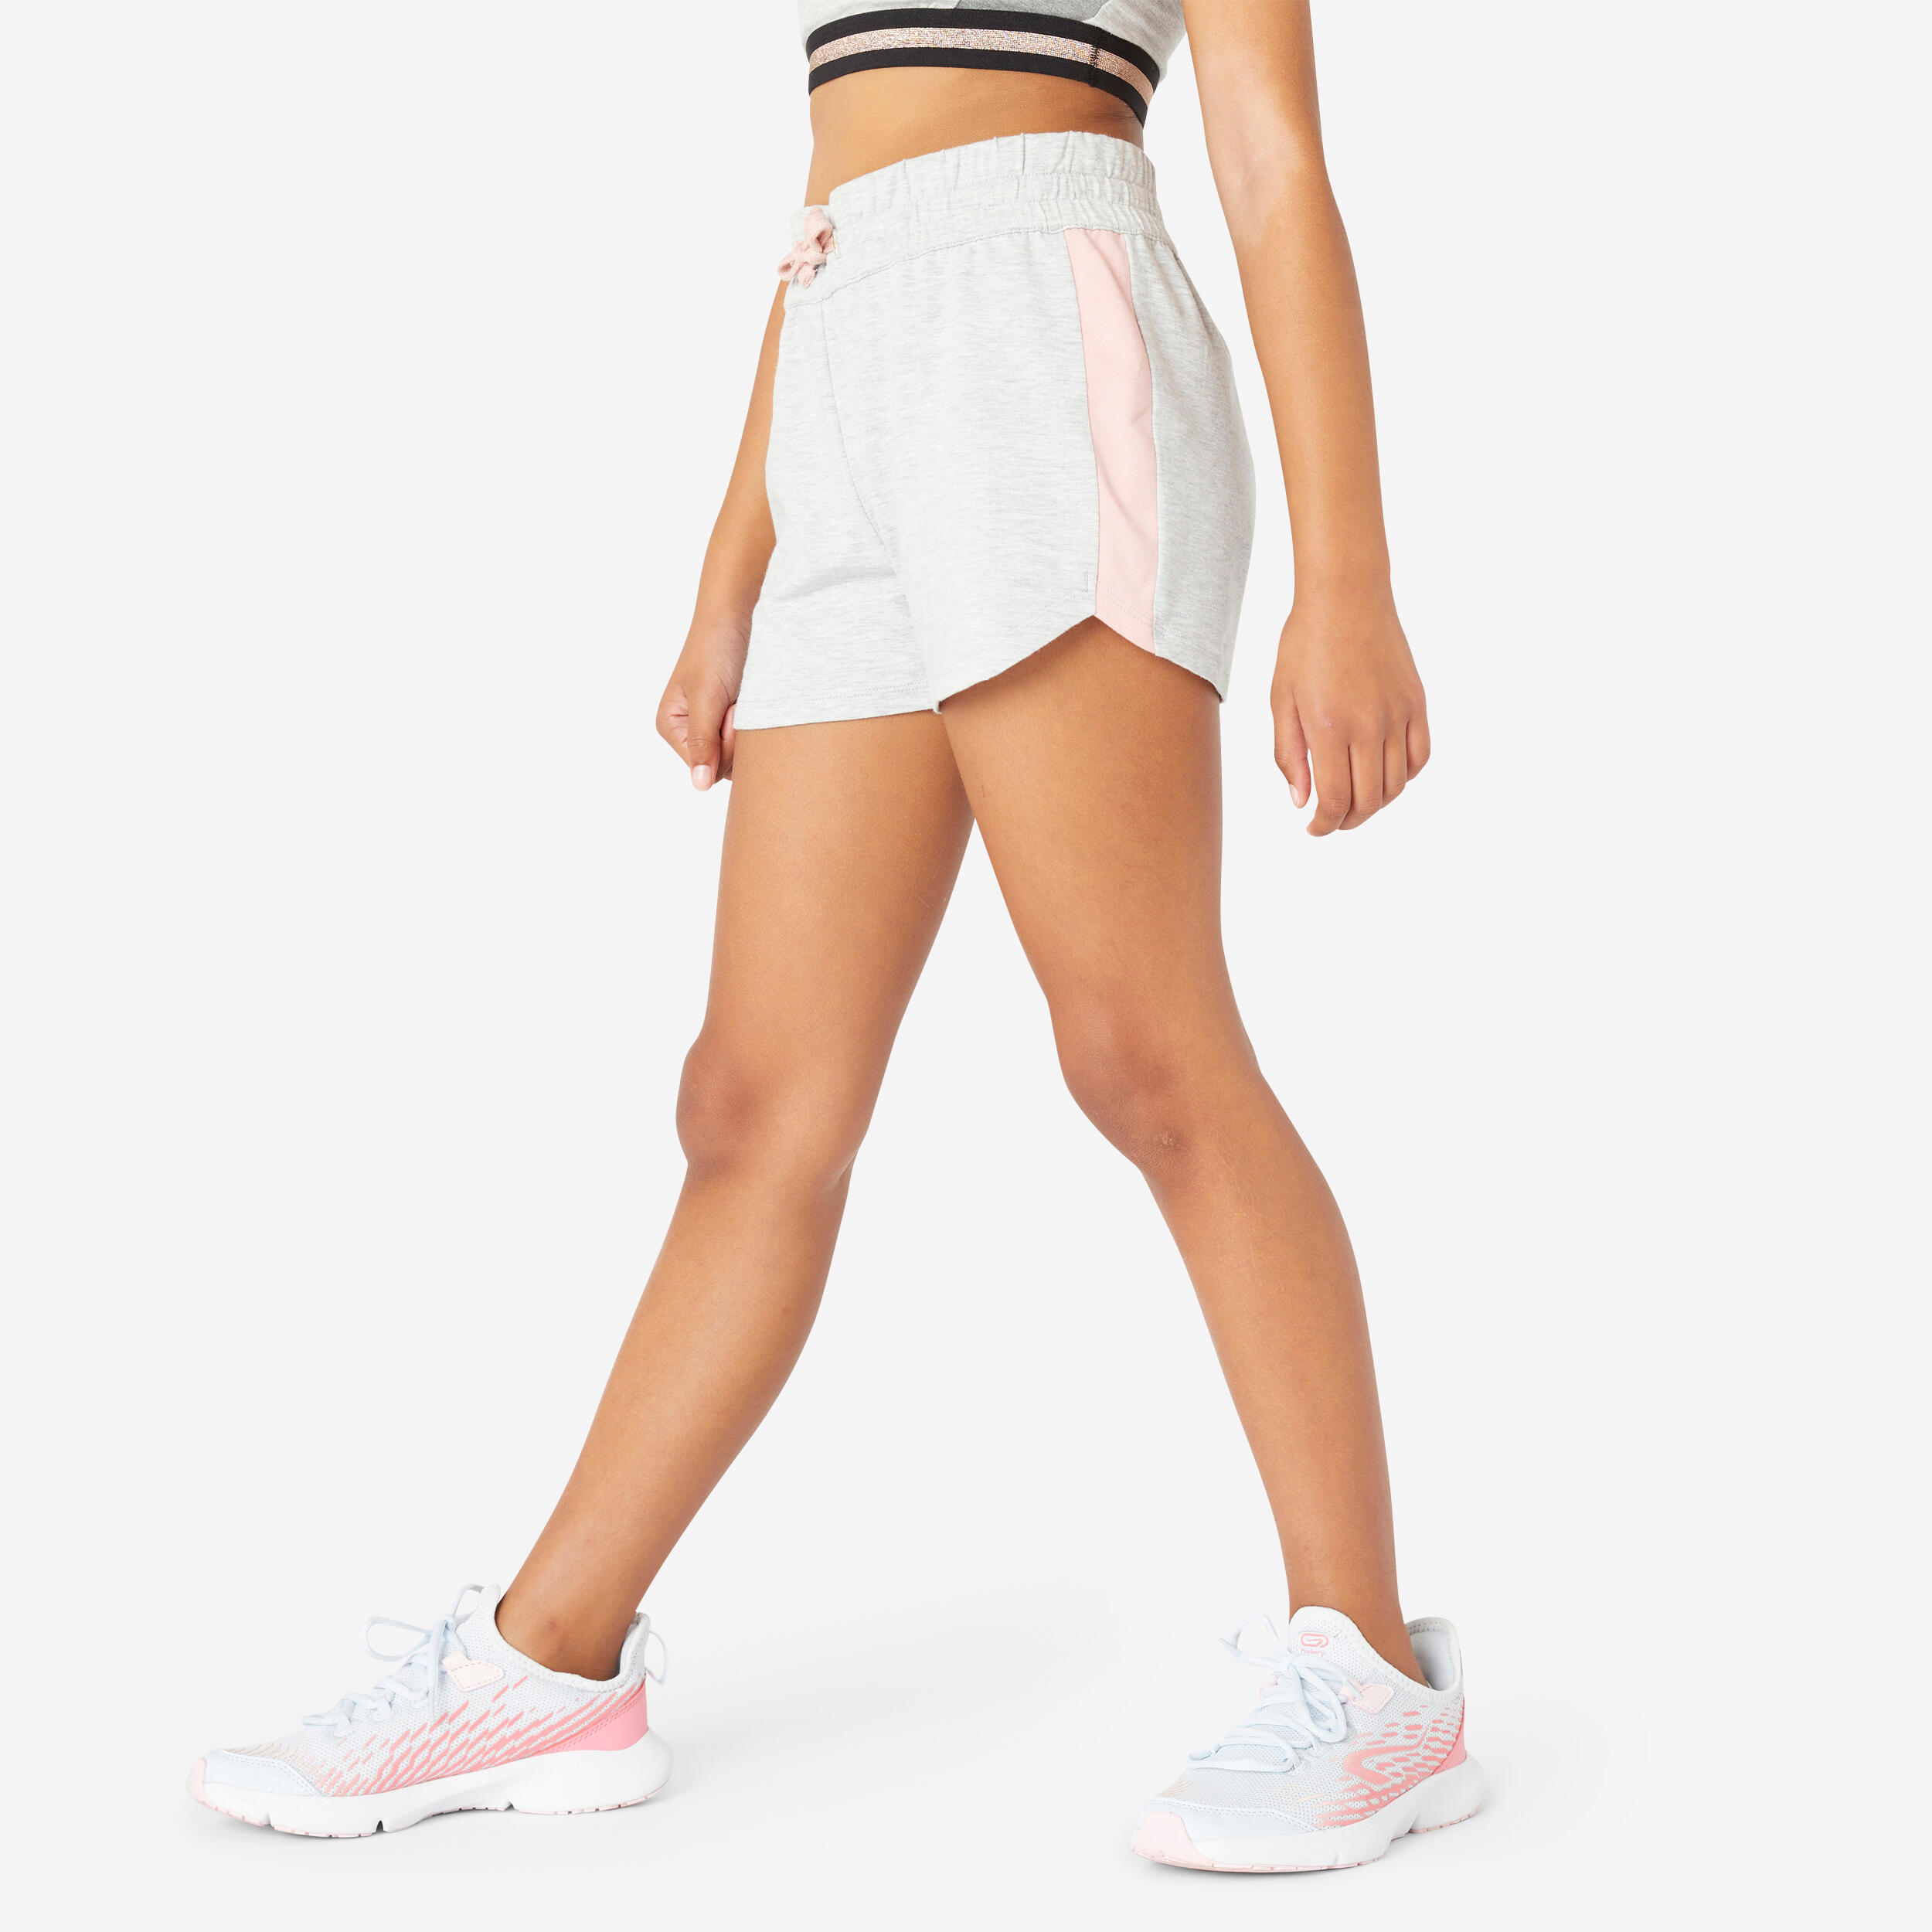 Nike Shorts Girls Small Black Tempo Running Dri-Fit Training Youth